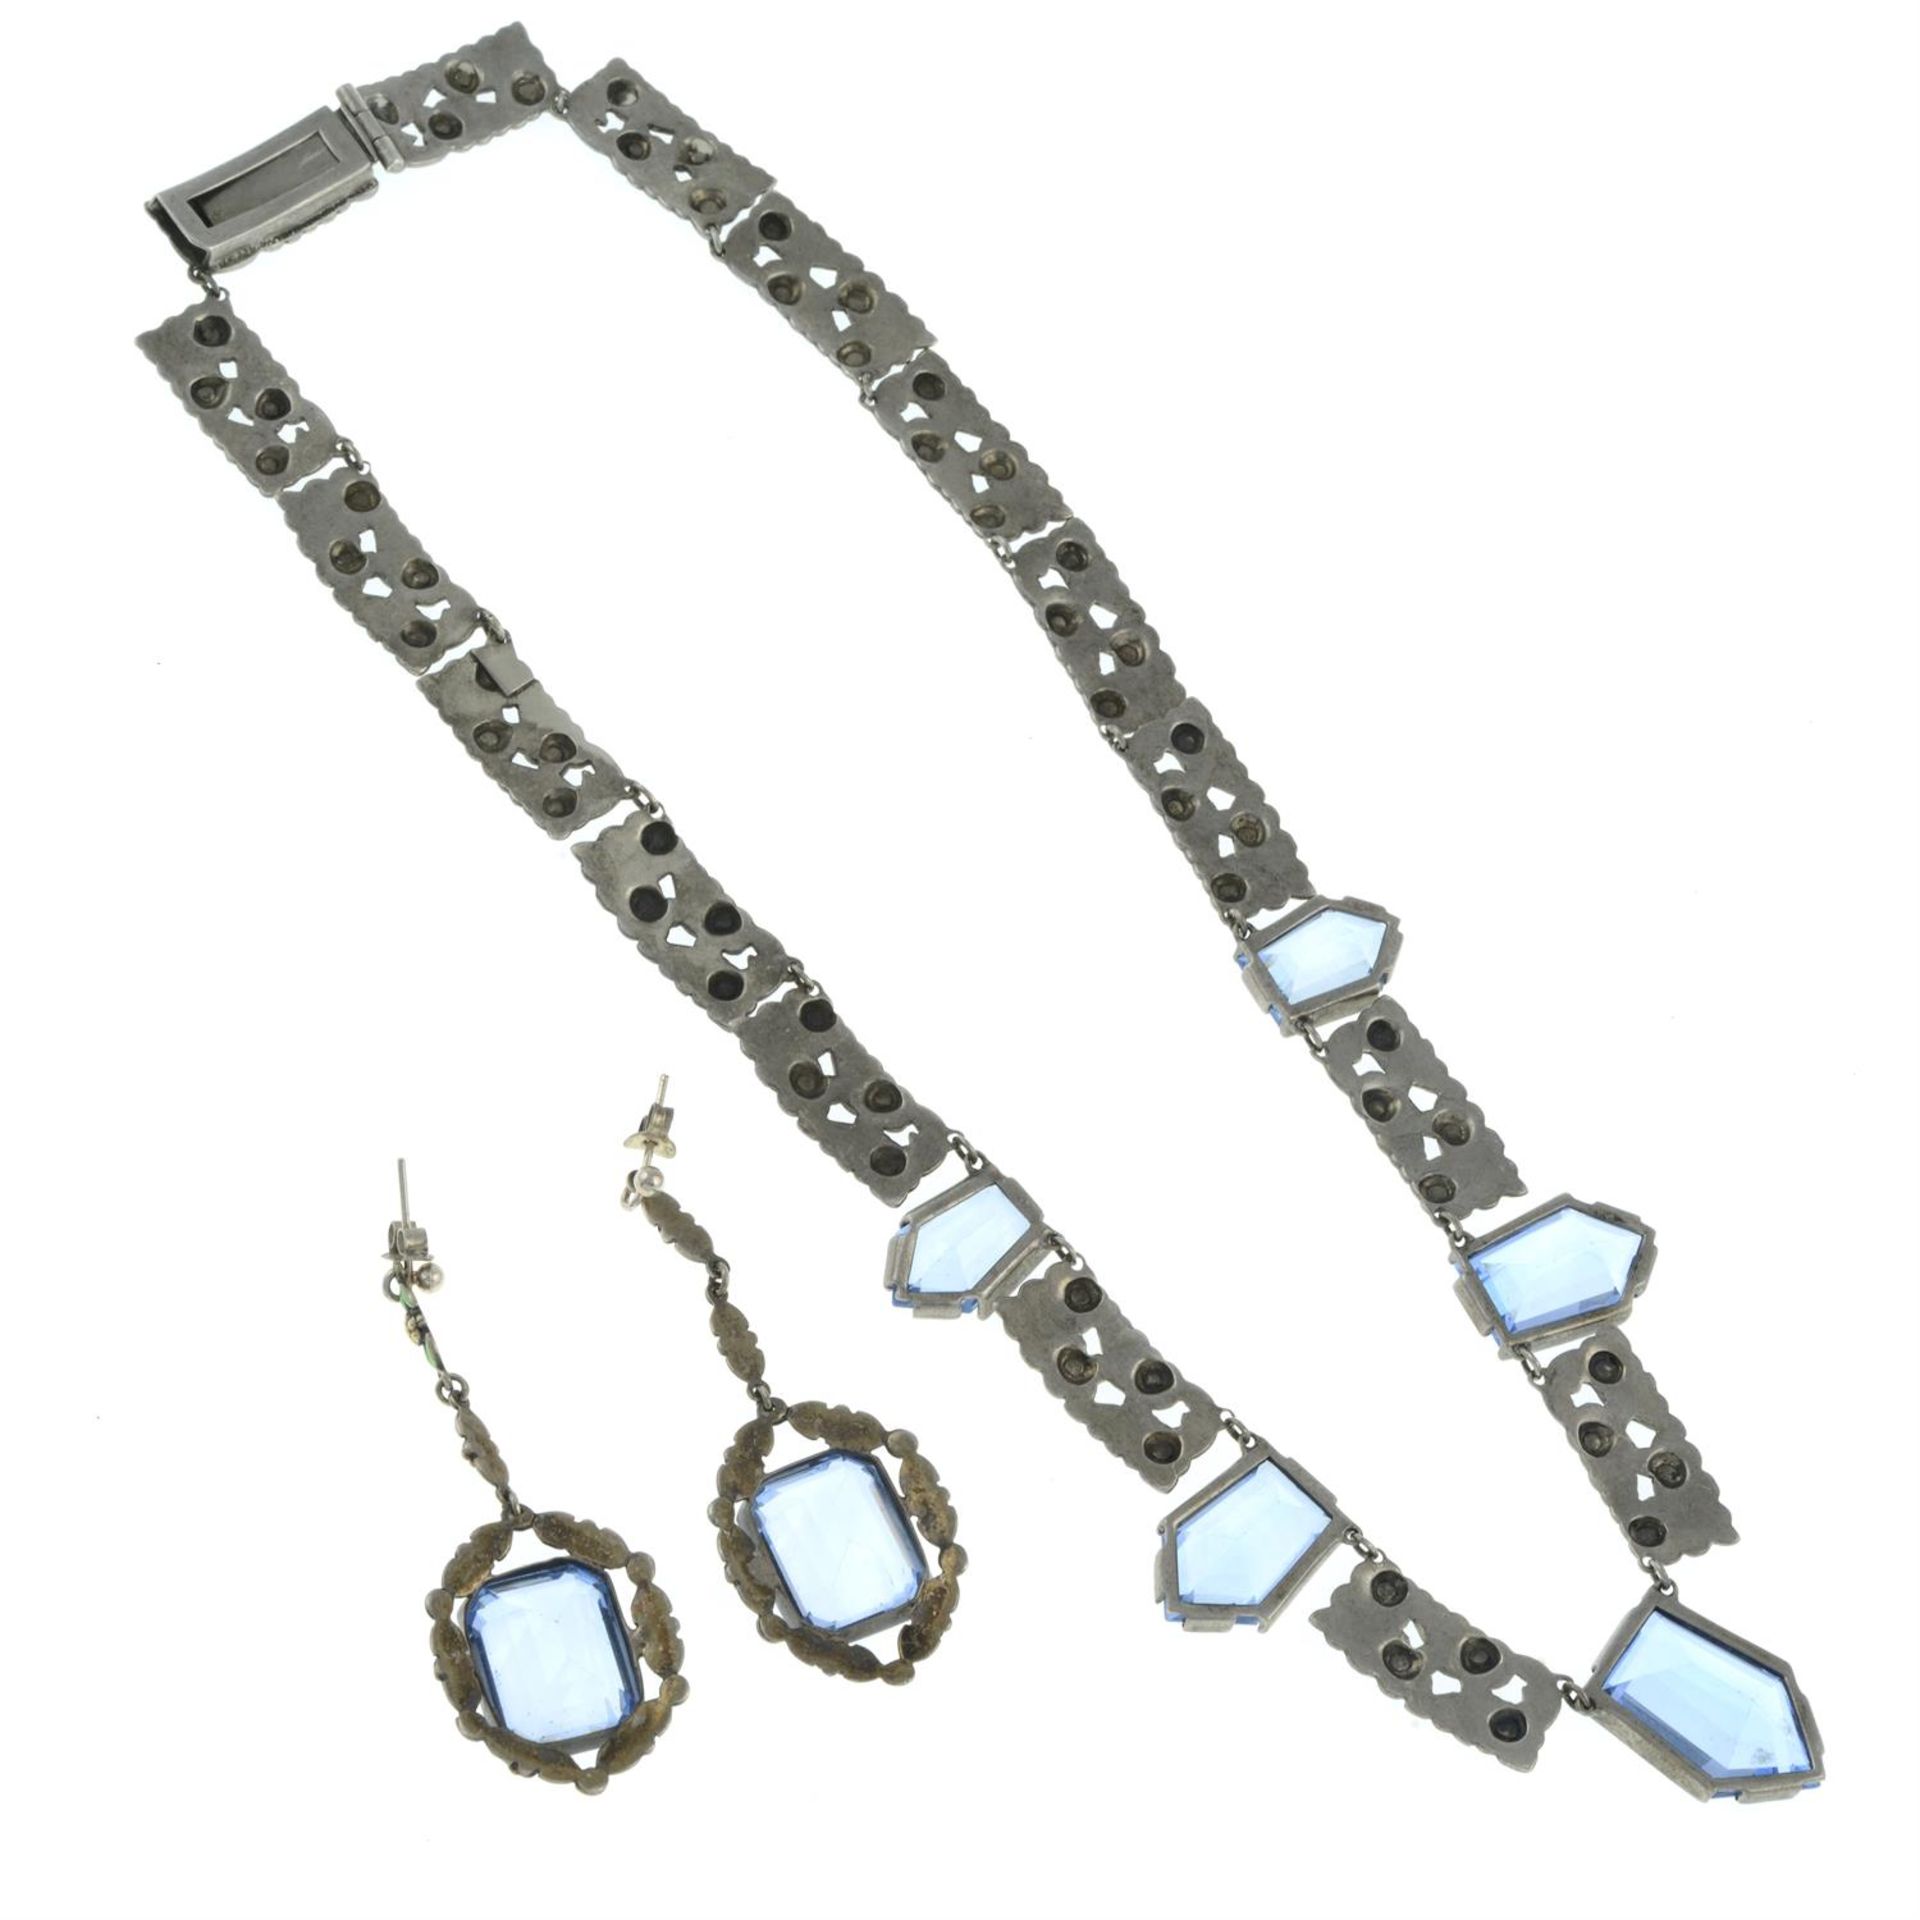 Gem necklace & earrings set, Bernard Instone - Image 2 of 2